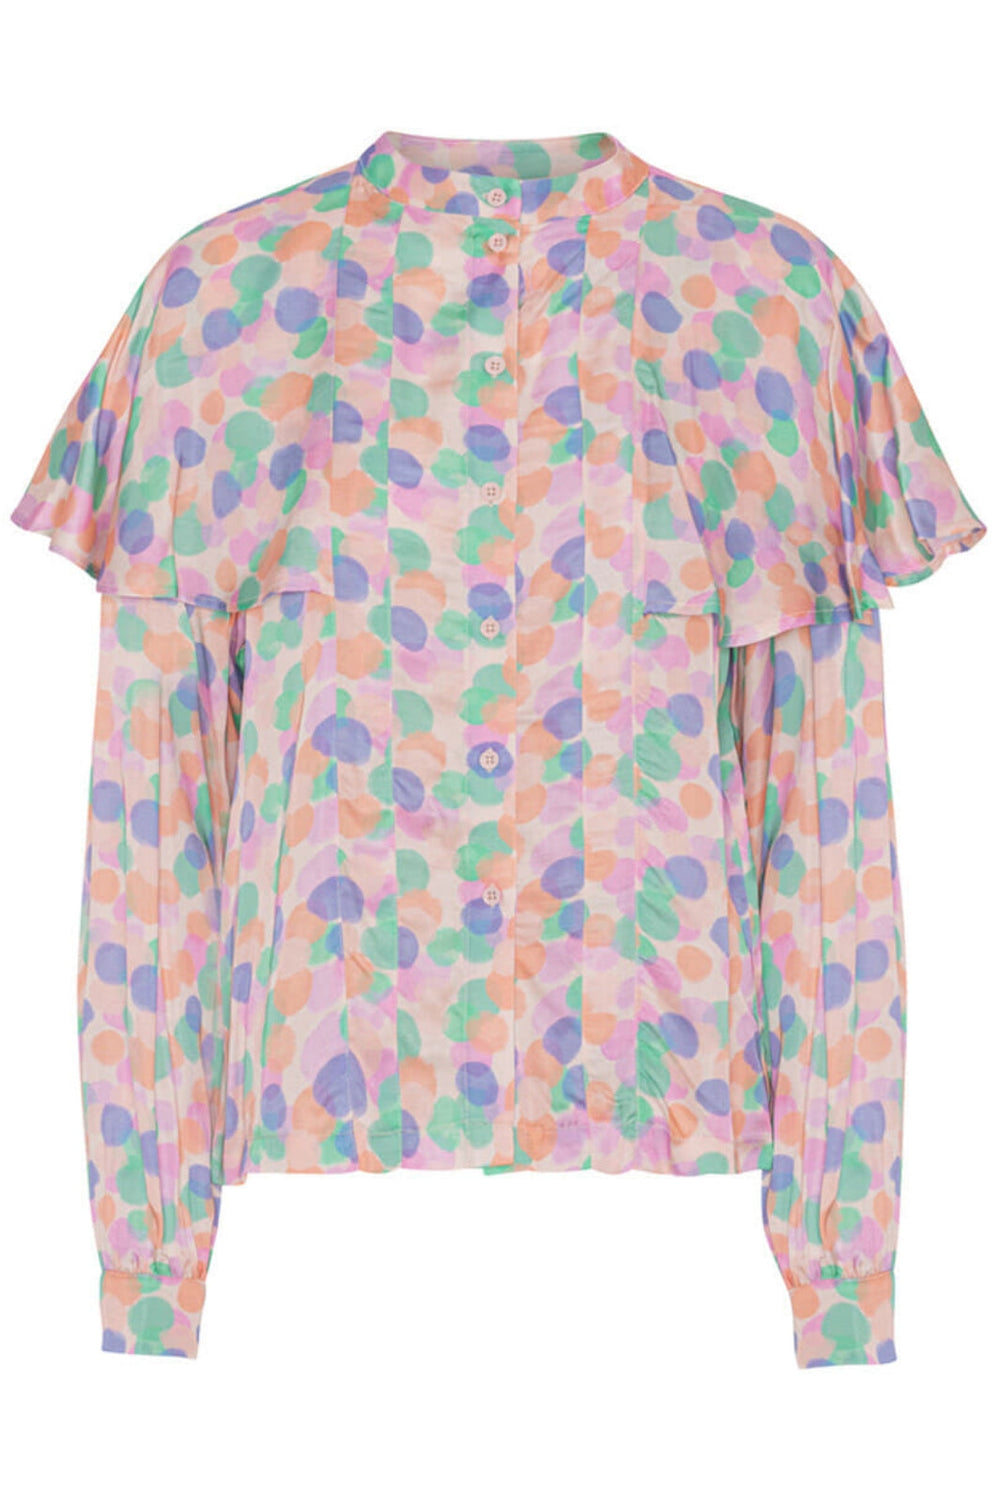 Hunkøn - Pixi Shirt - Funfetti Art Print Skjorter 